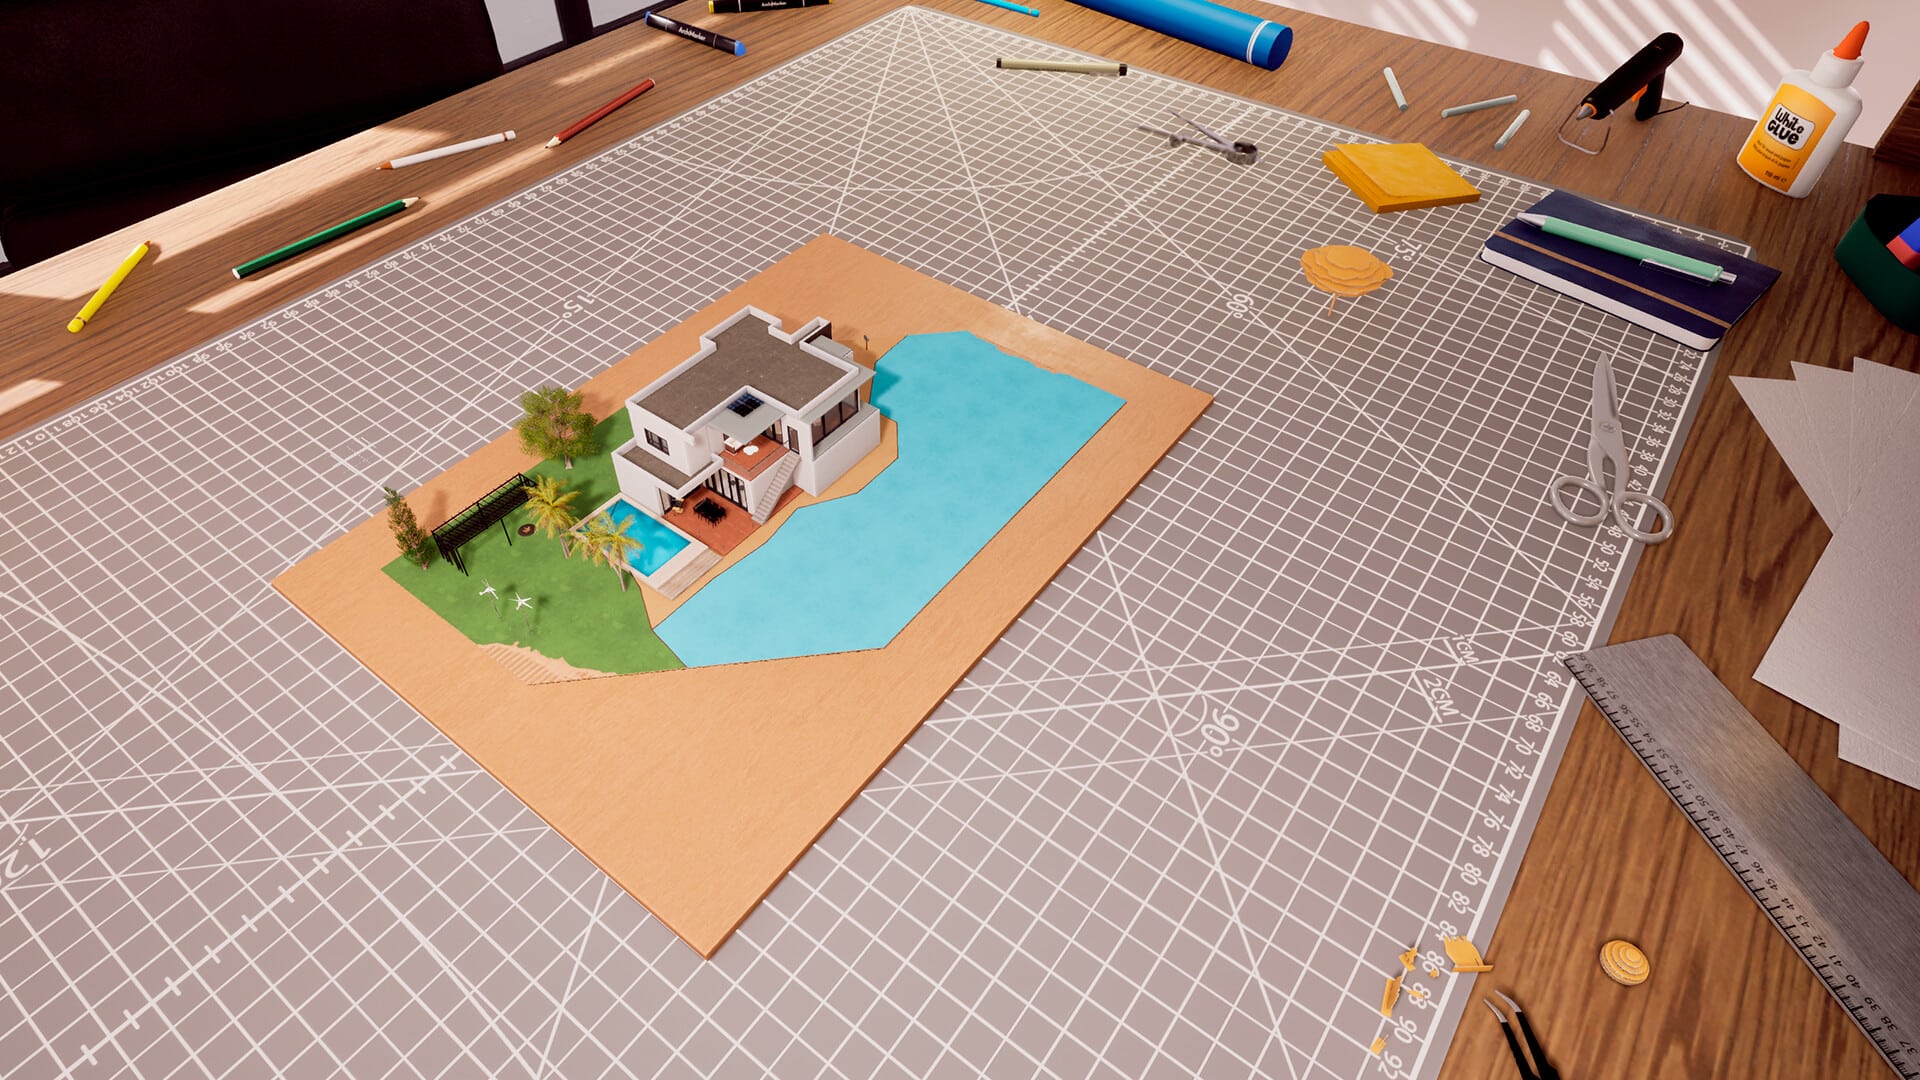 Architect life a house design simulator screenshot 01 6